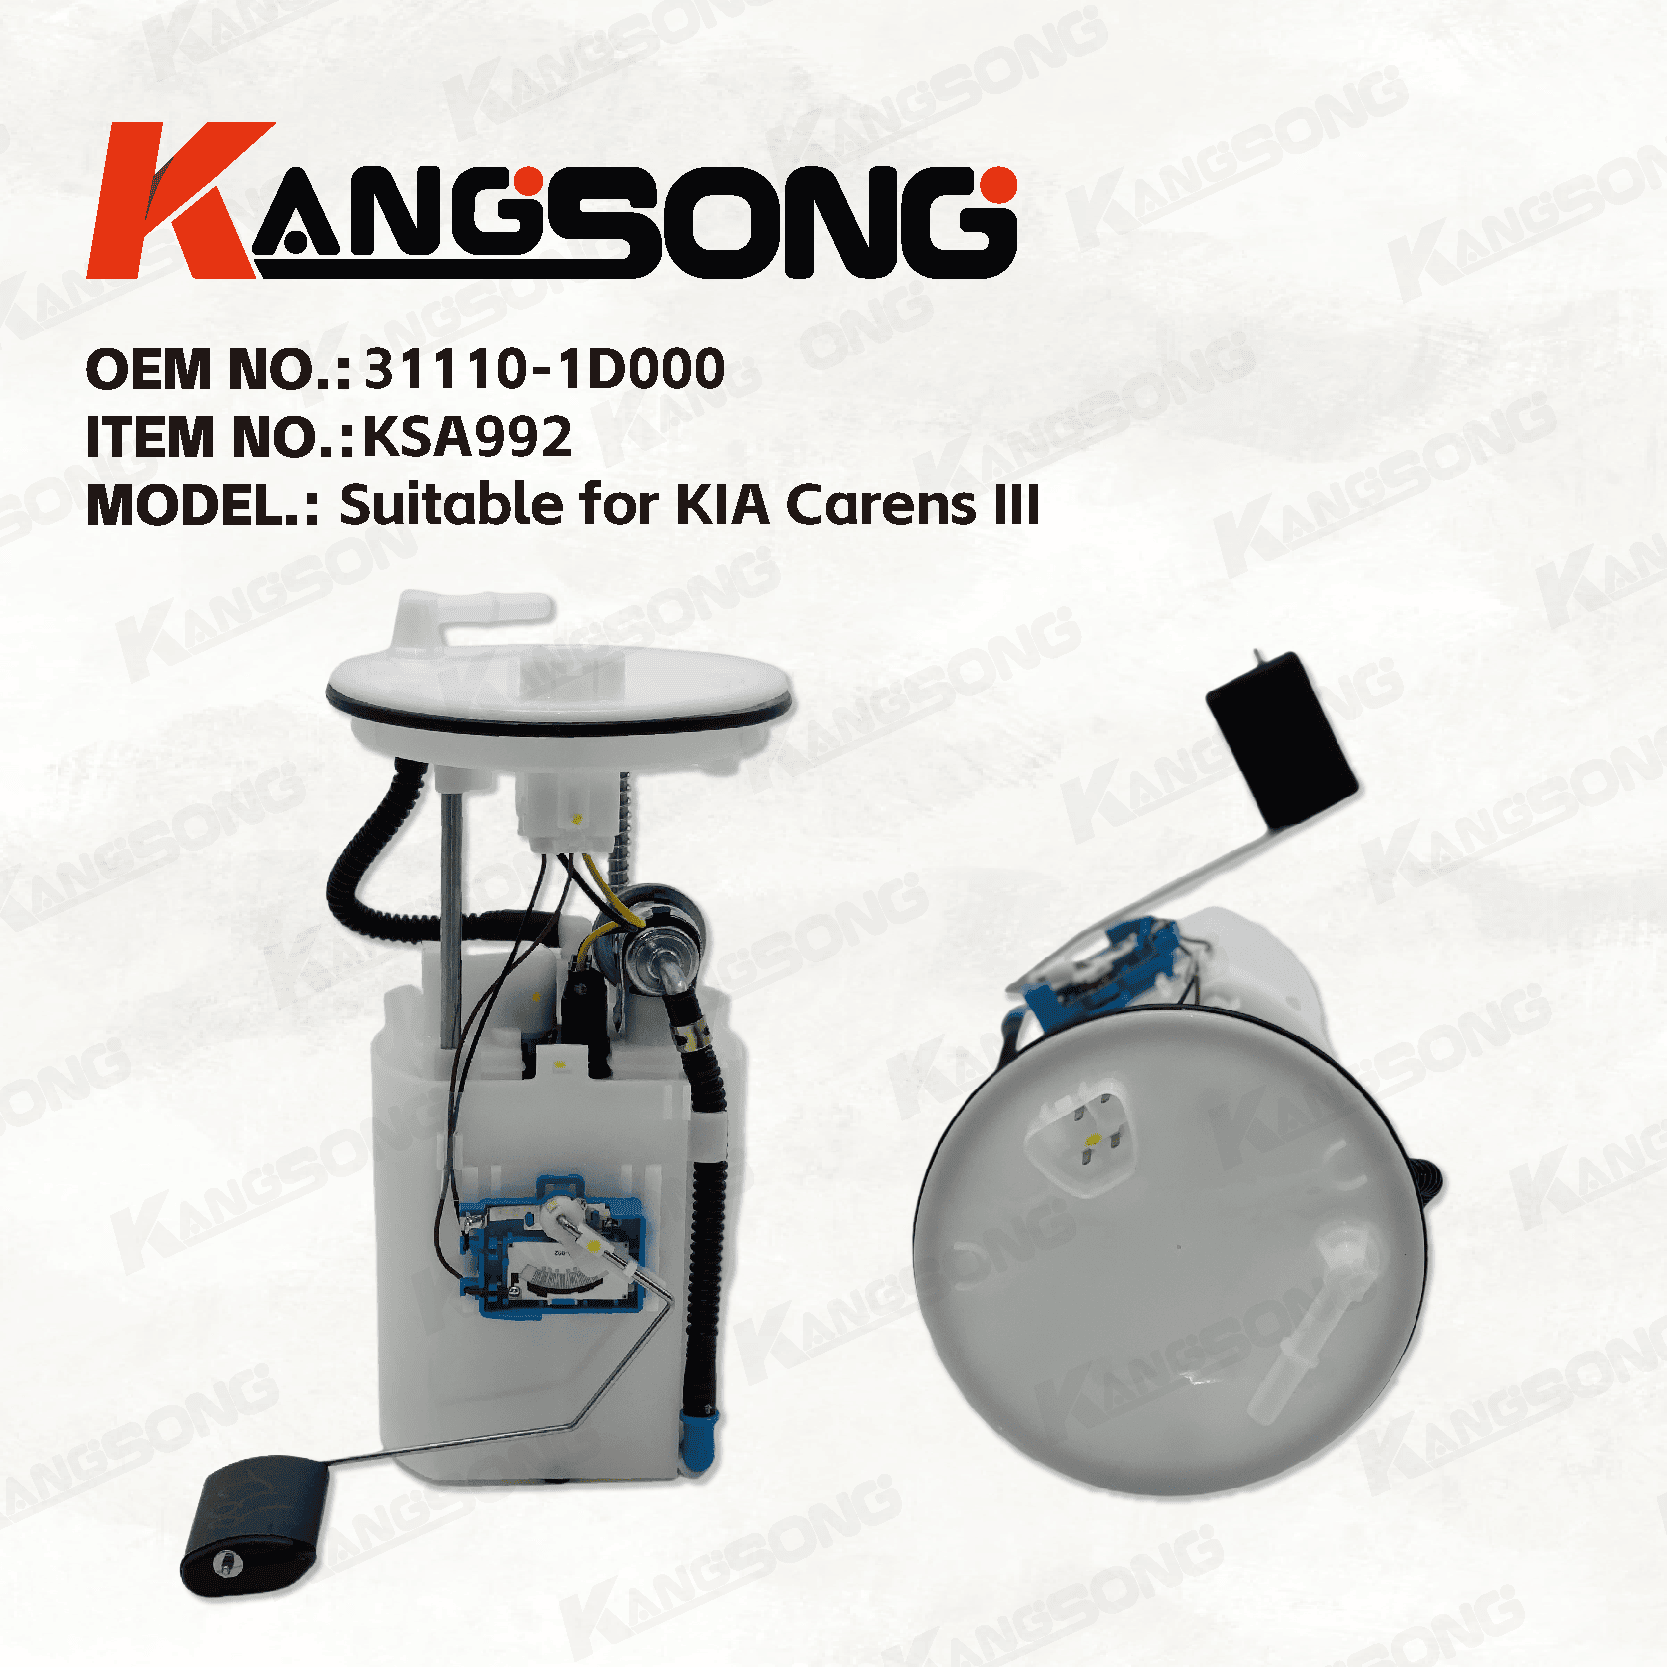 Applicable to KIA Carens III/31110-1D000 /Fuel Pump Assembly/ KS-A992